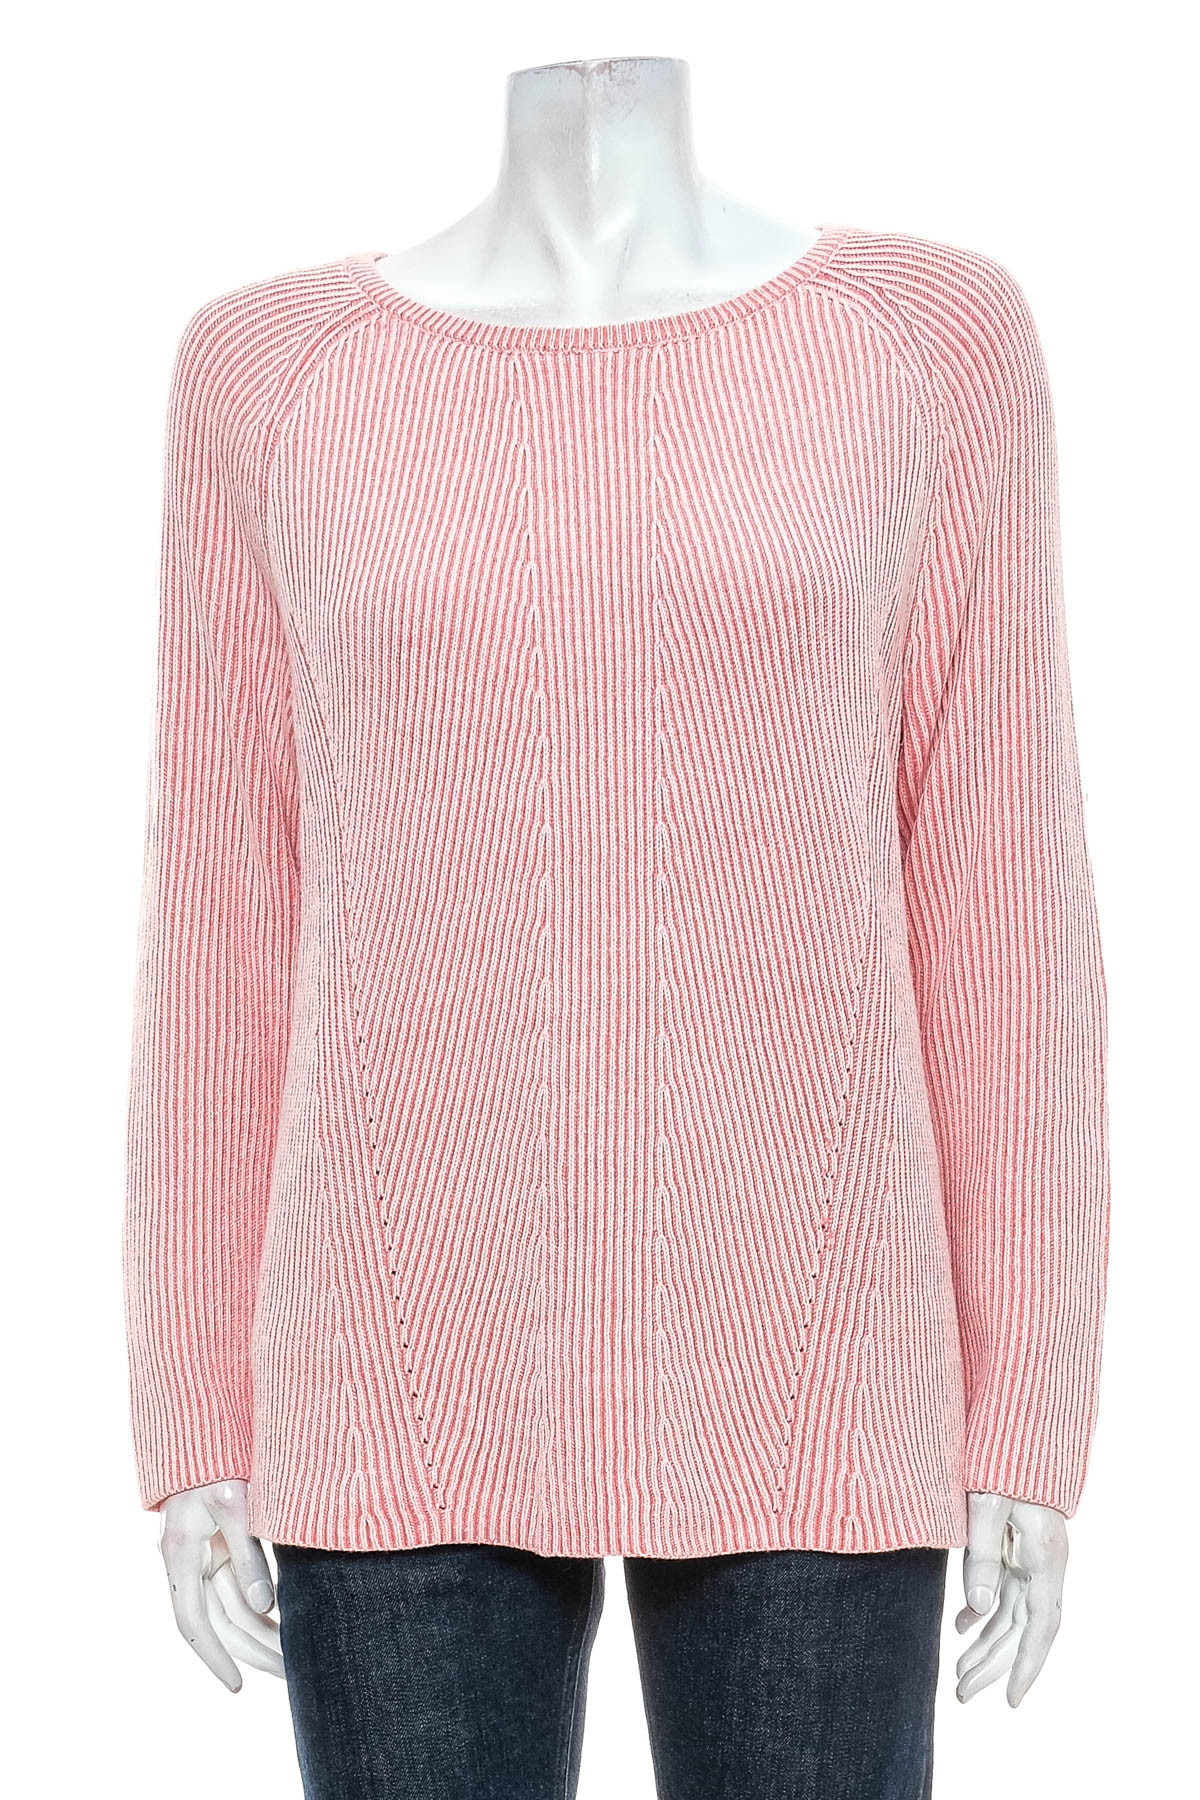 Women's sweater - Betty Barclay - 0